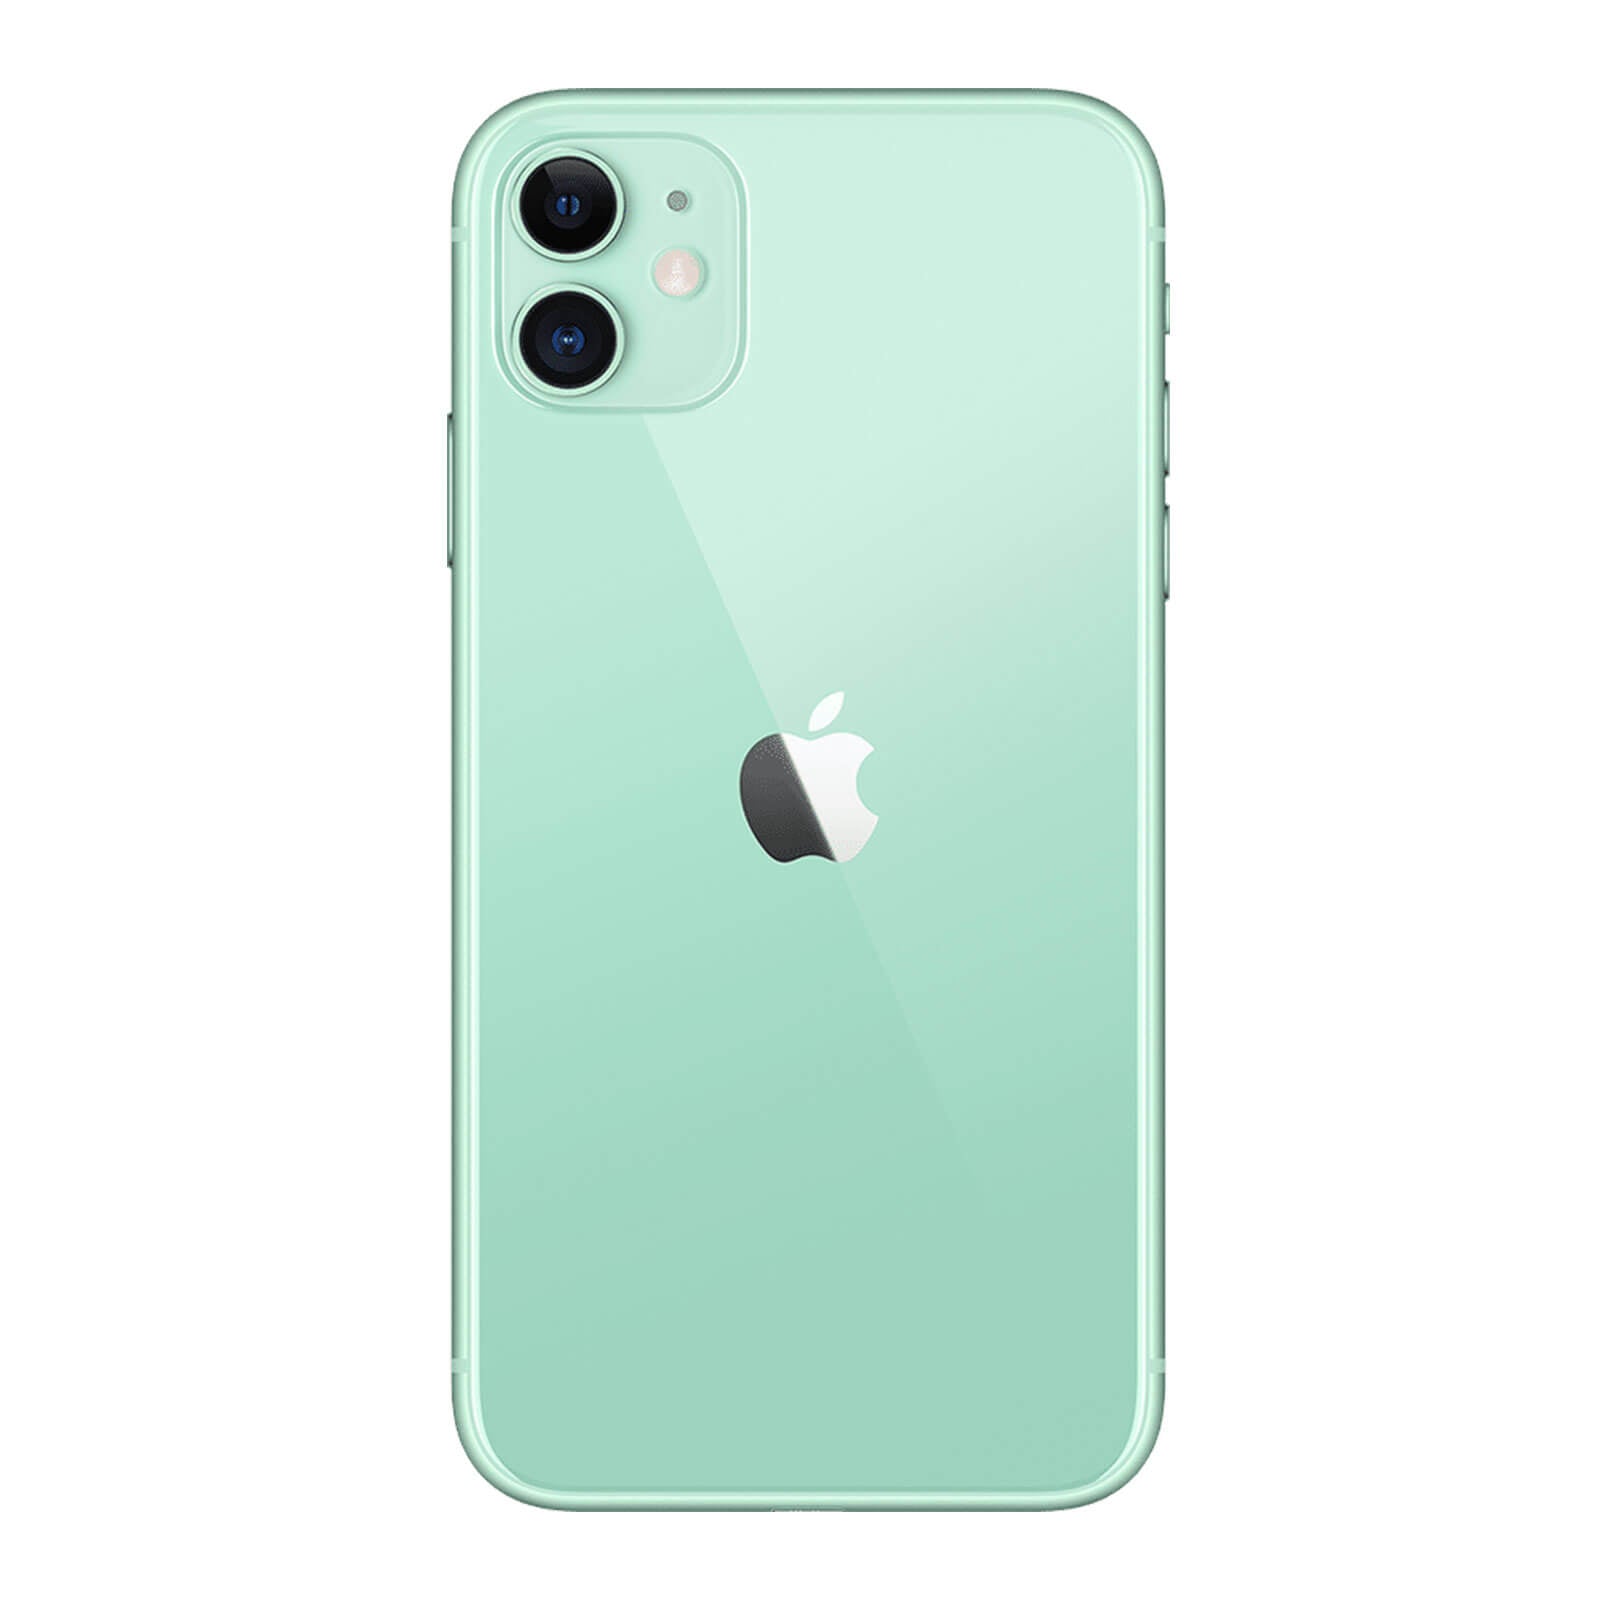 Apple iPhone 11 64GB Green Very Good - Sprint